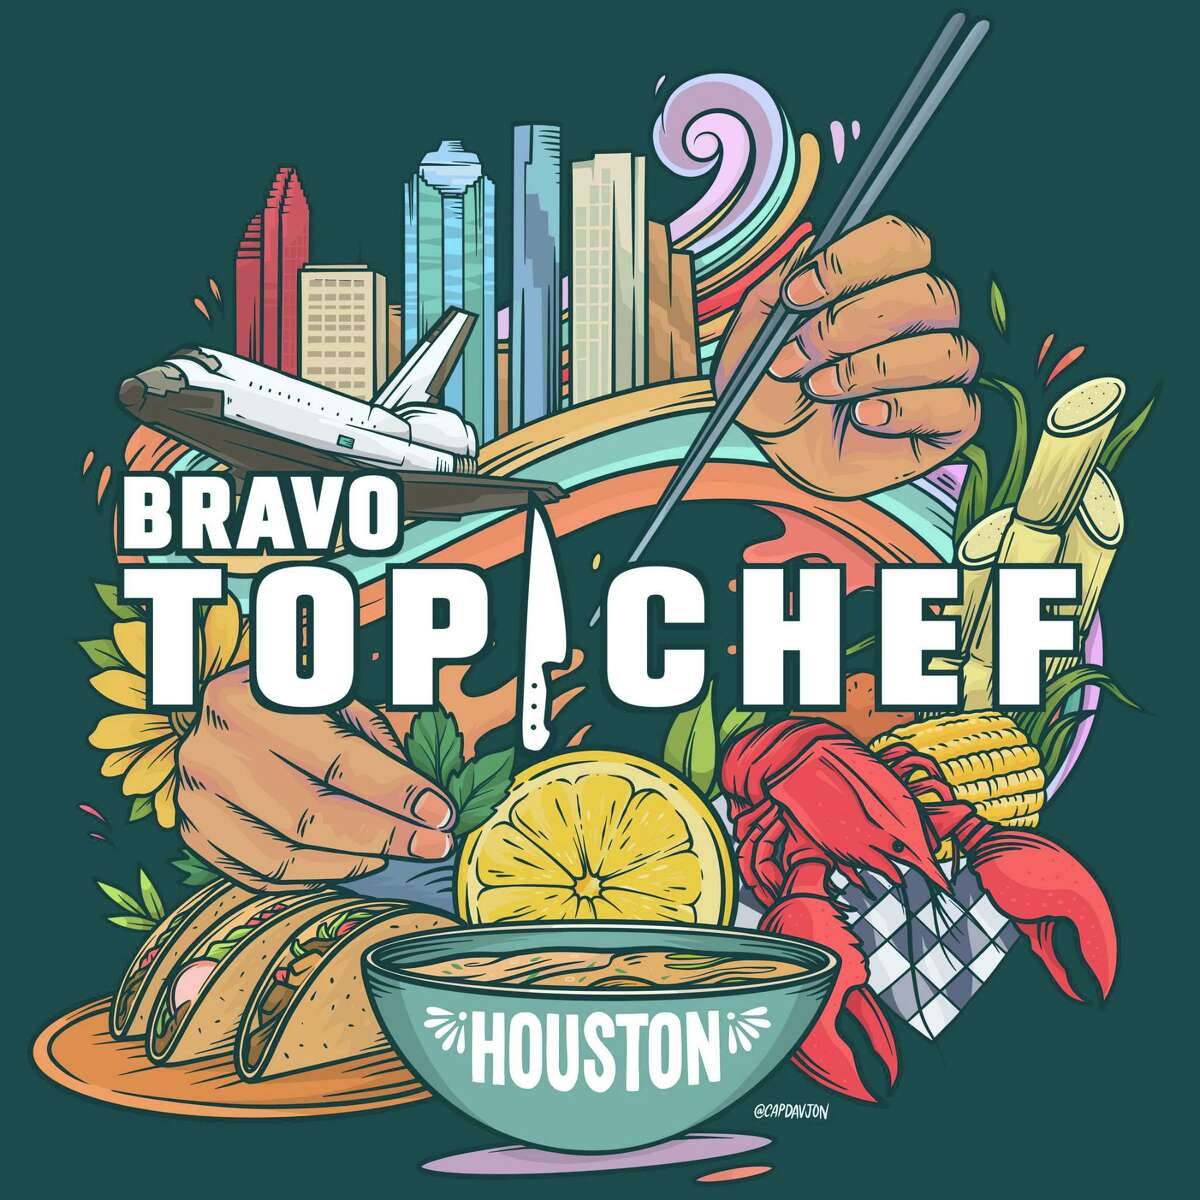 The logo for Season 19 of Bravo's "Top Chef" was designed by Houston artist David Maldonado.